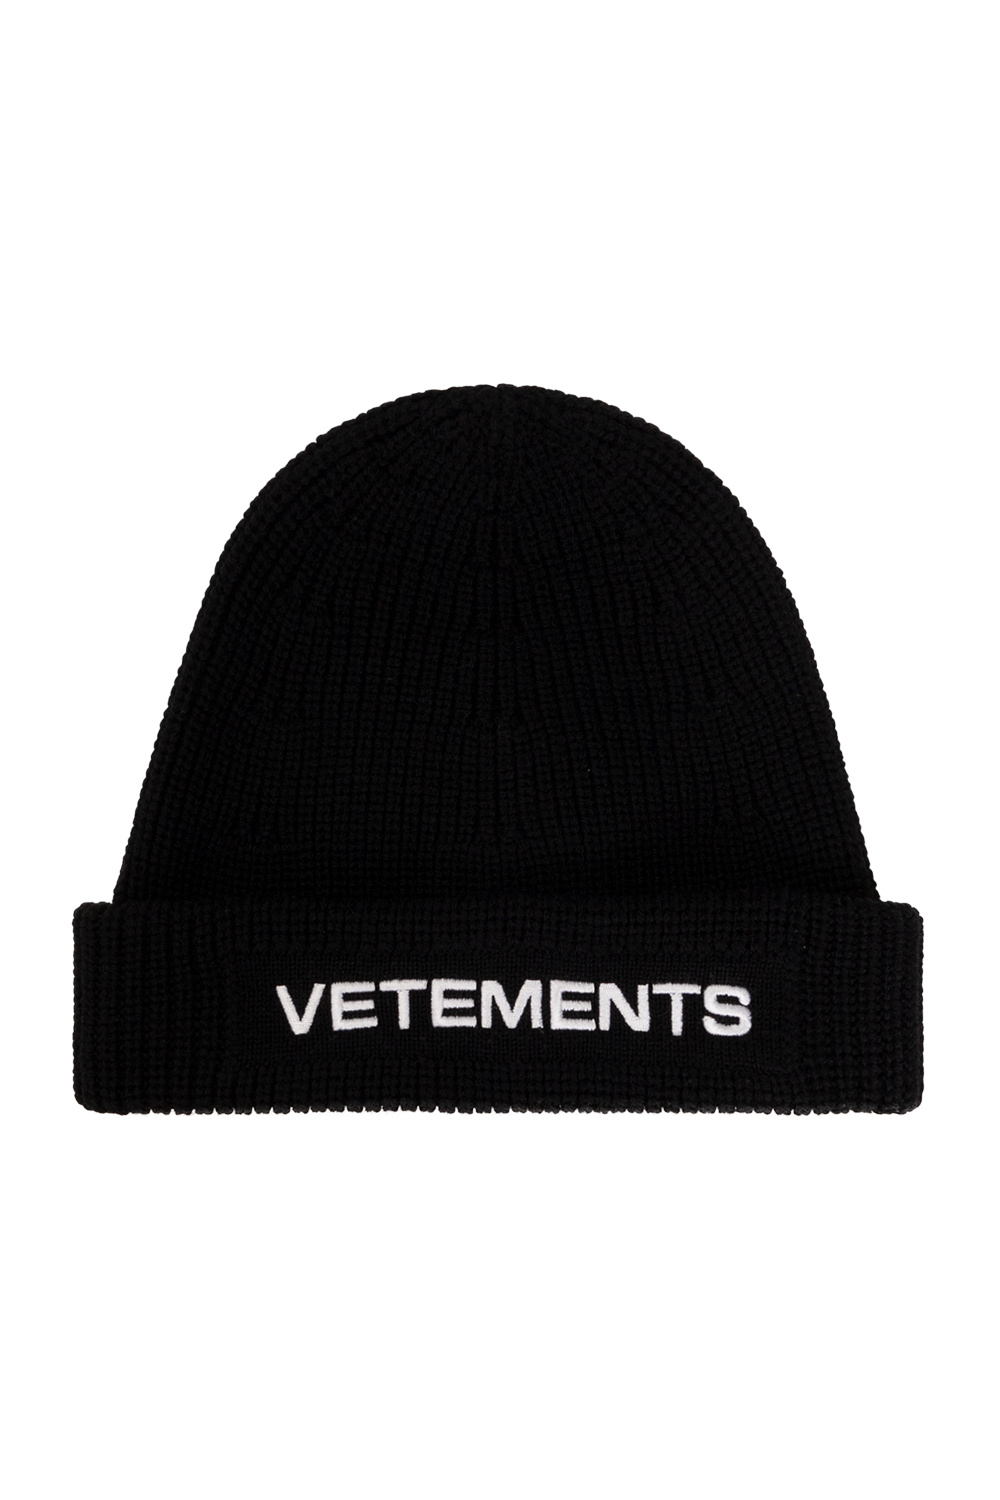 Accessorie | logo Beanie | Men\'s VETEMENTS hat with woven StclaircomoShops a |